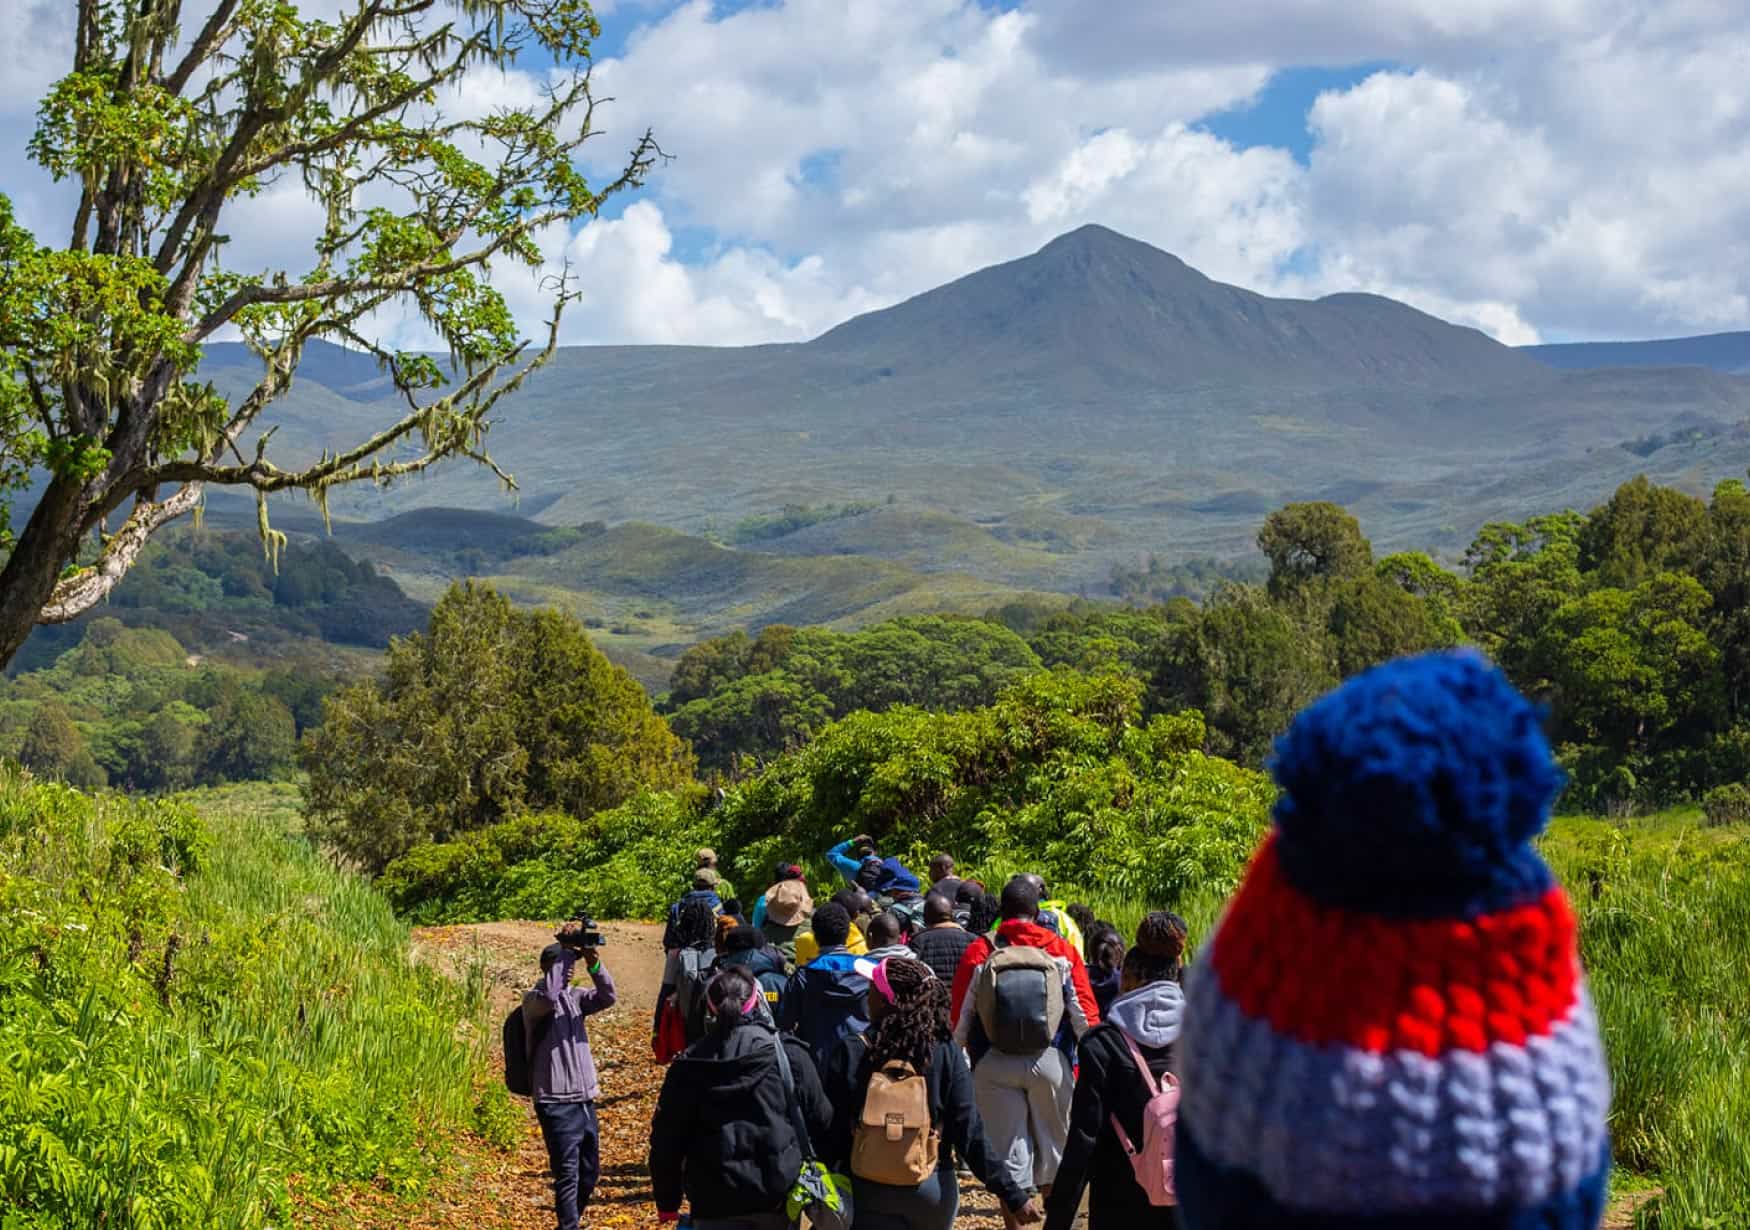 Highlands to Plains through Valleys: Mt. Kenya to Maasai Mara.